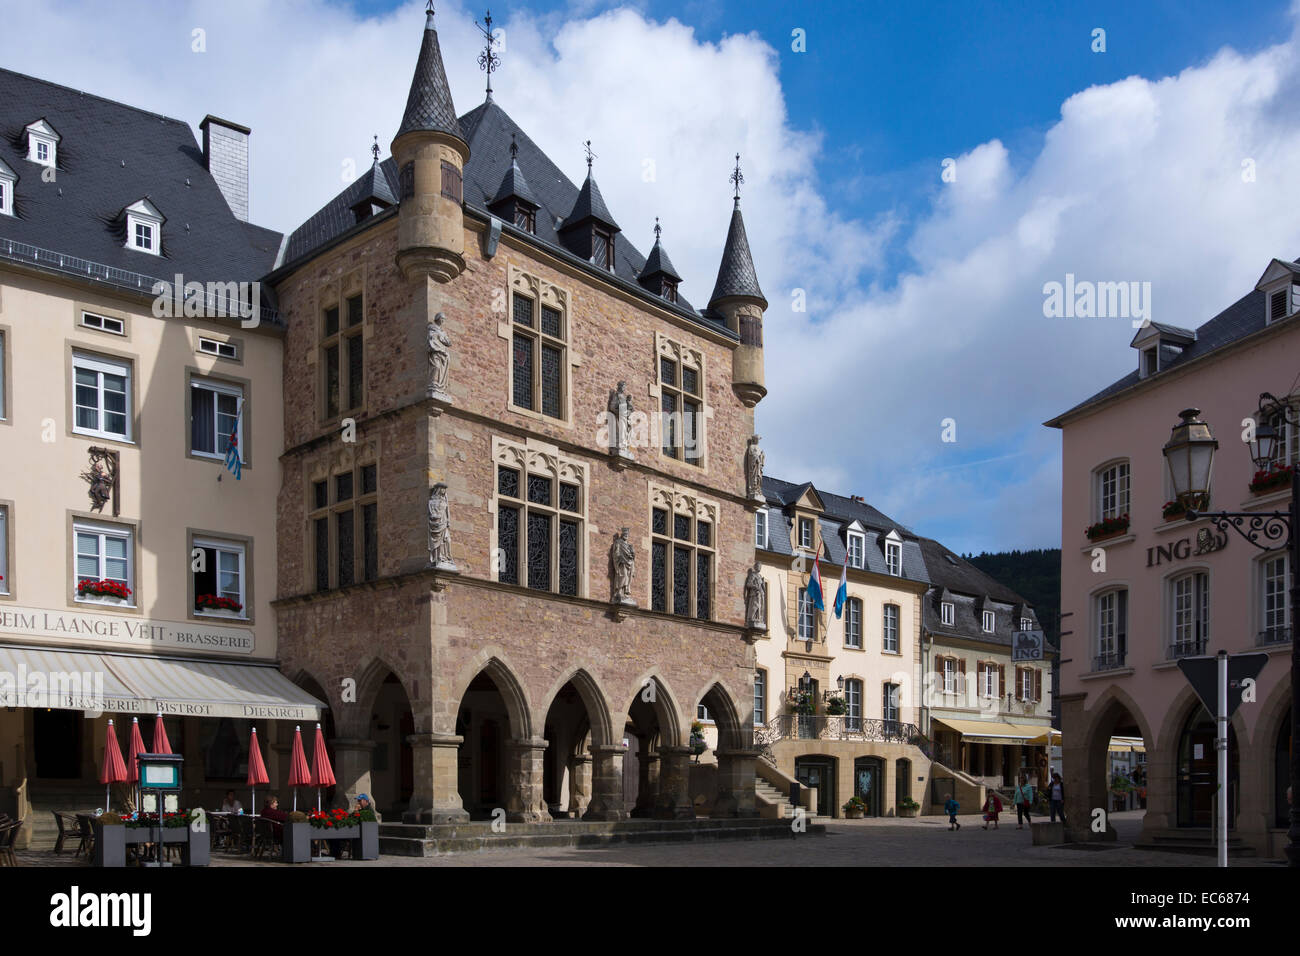 Market square with the Dentzelt building, Echternach, district Grevenmacher, canton Echternach, Luxembourg, Europe Stock Photo